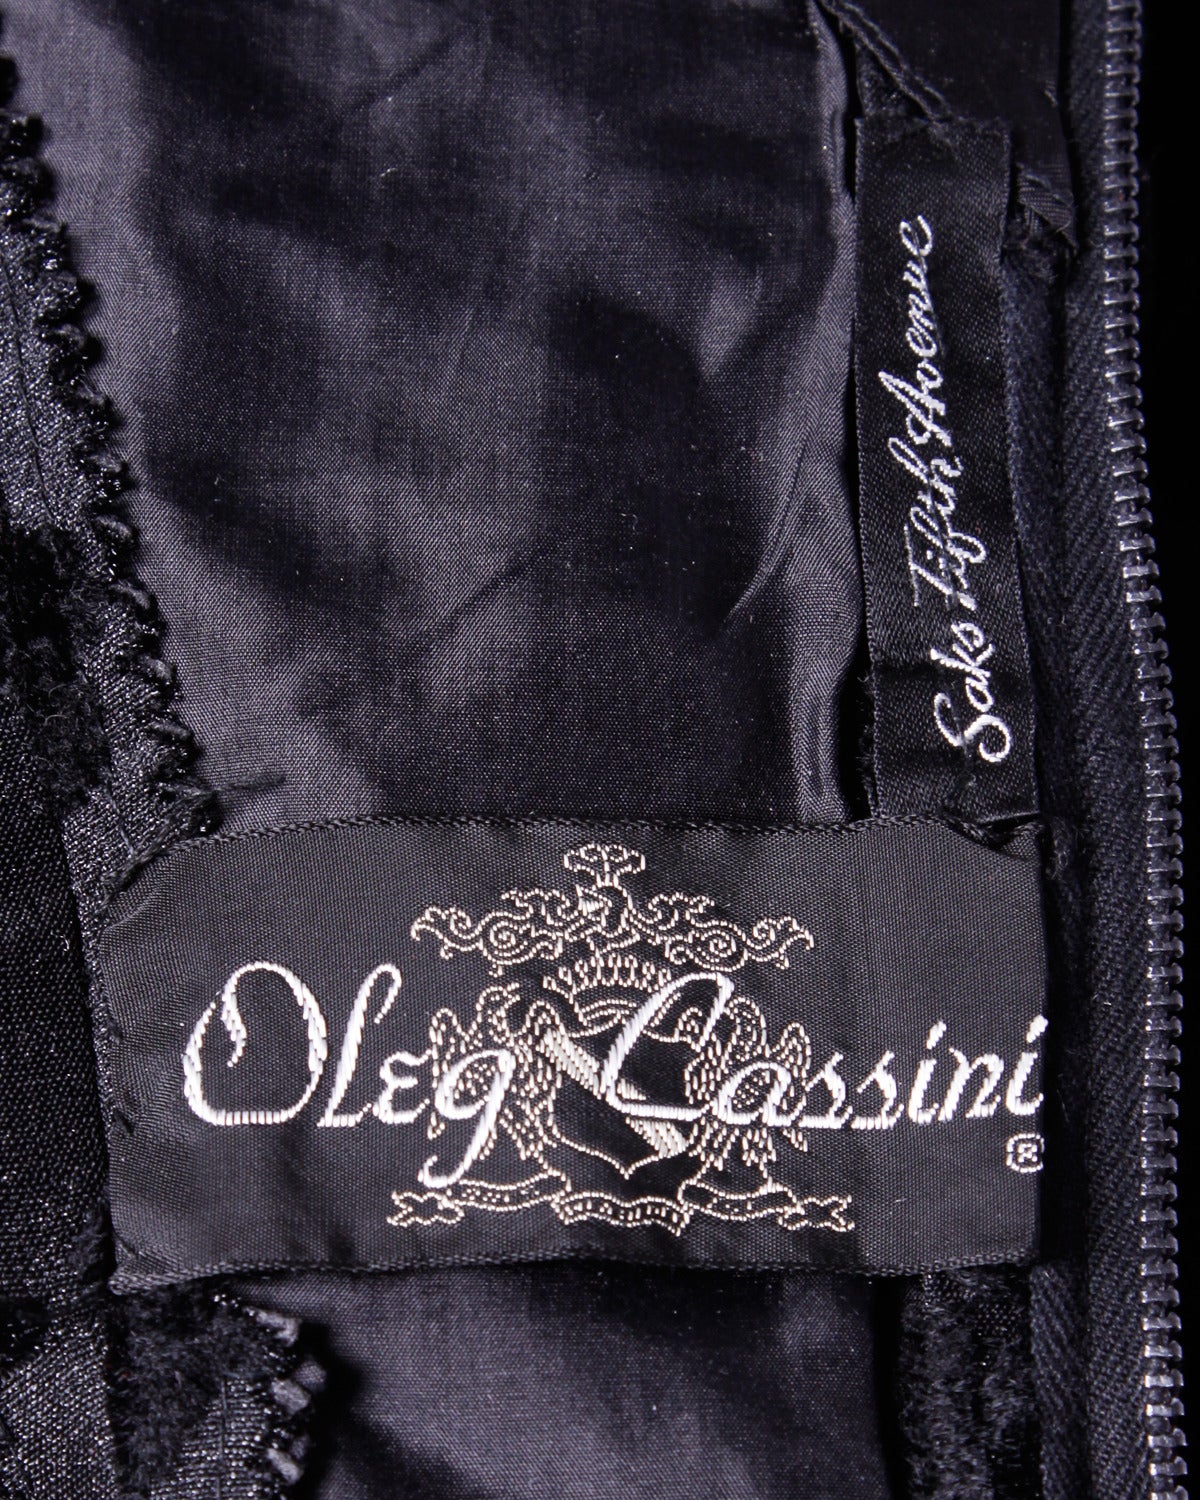 Women's Early Oleg Cassini Couture Vintage 1950's 50s Black Formal Dress